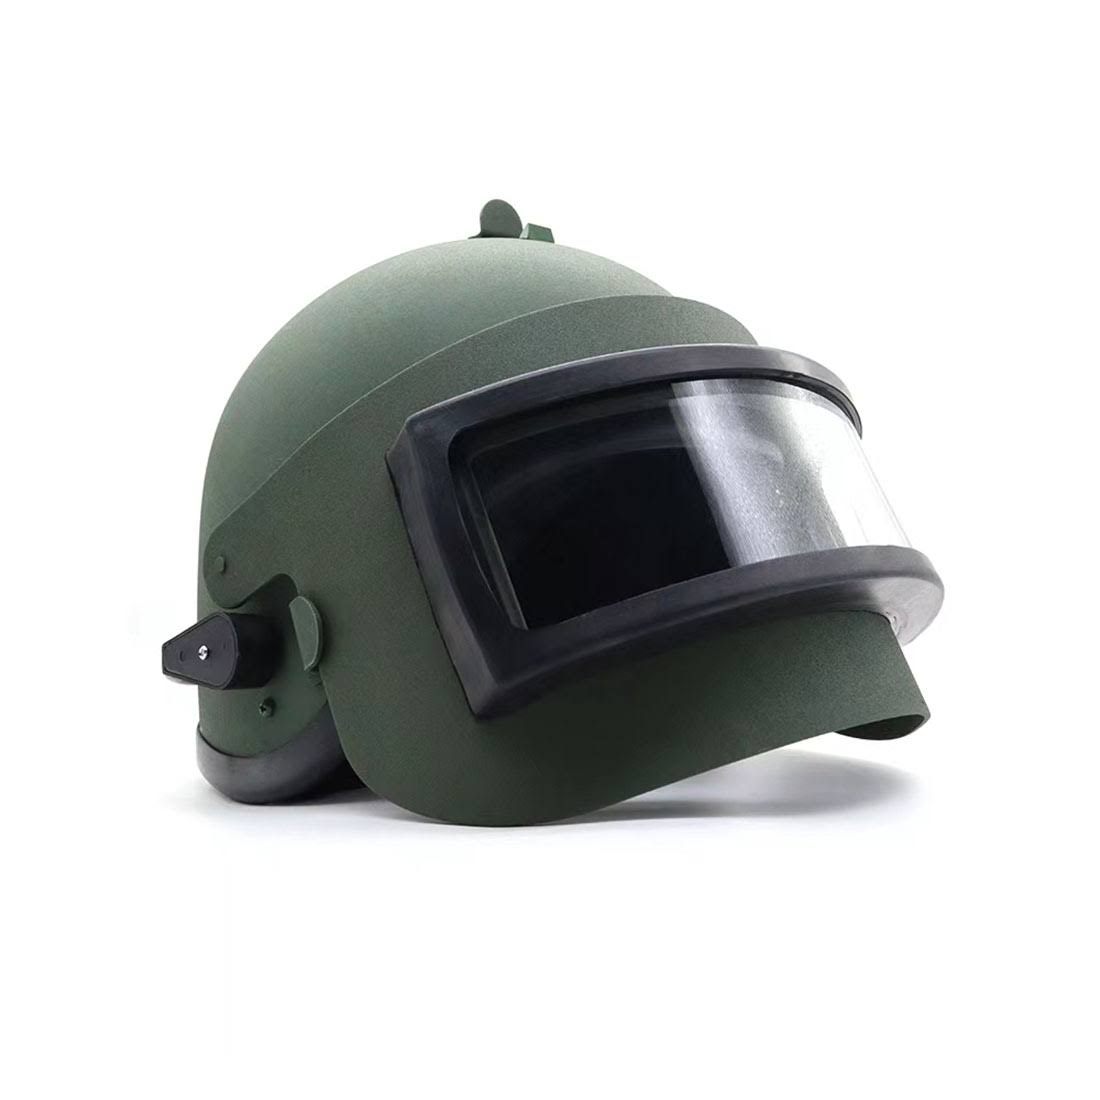 K63 Military Level Iiia Tactical Helmet (Green)